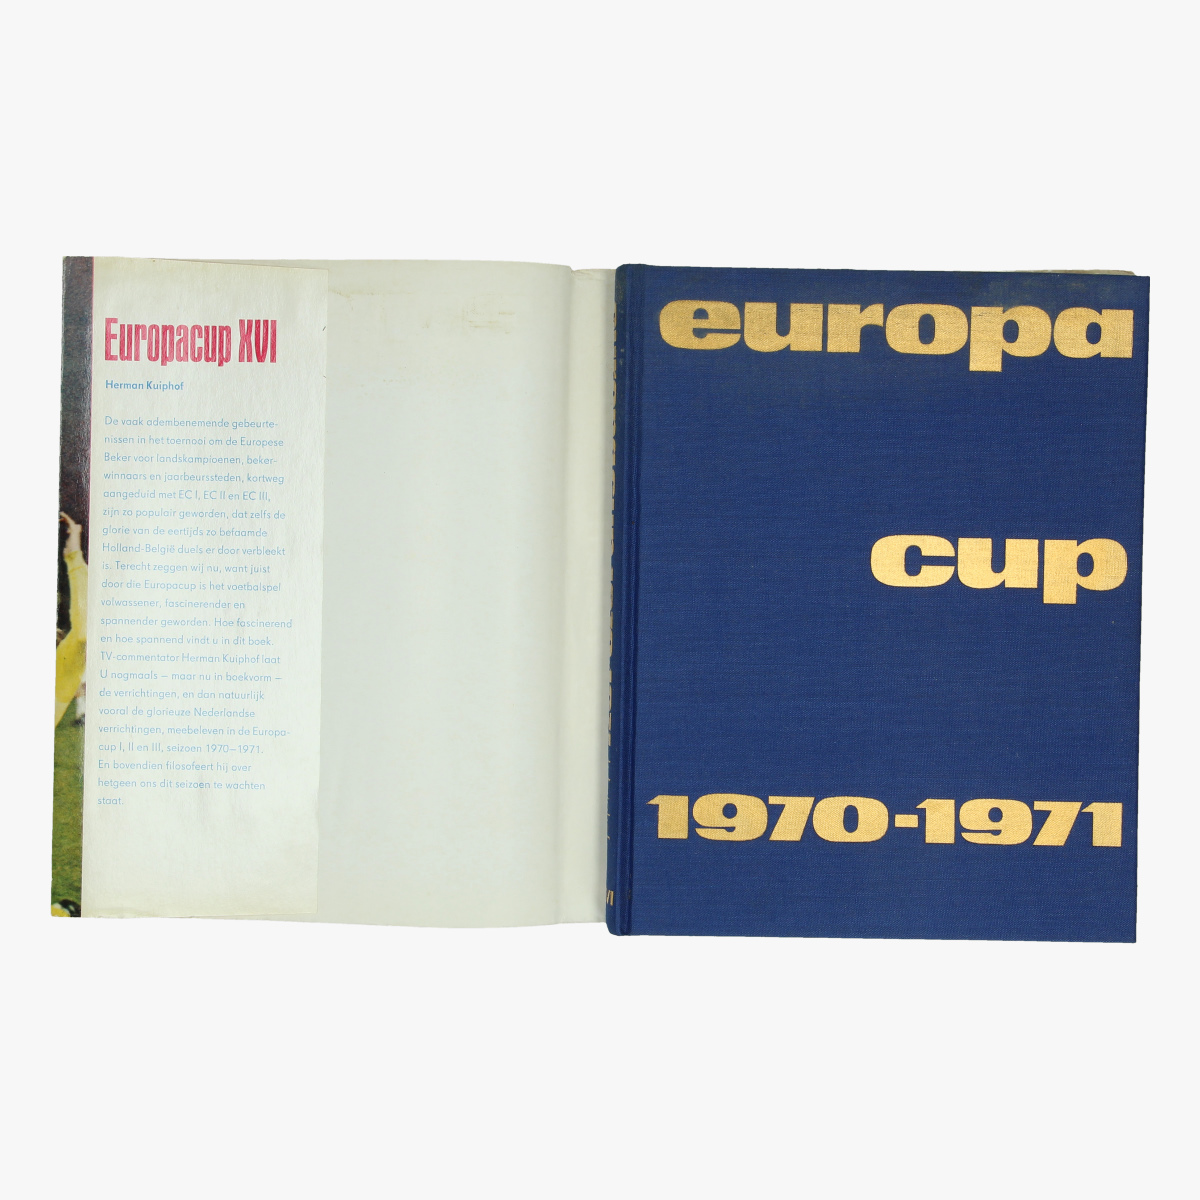 Afbeeldingen van boek voetbal europacup herman kuiphof 1970/71 uitgeverij luitingh - laren n.h